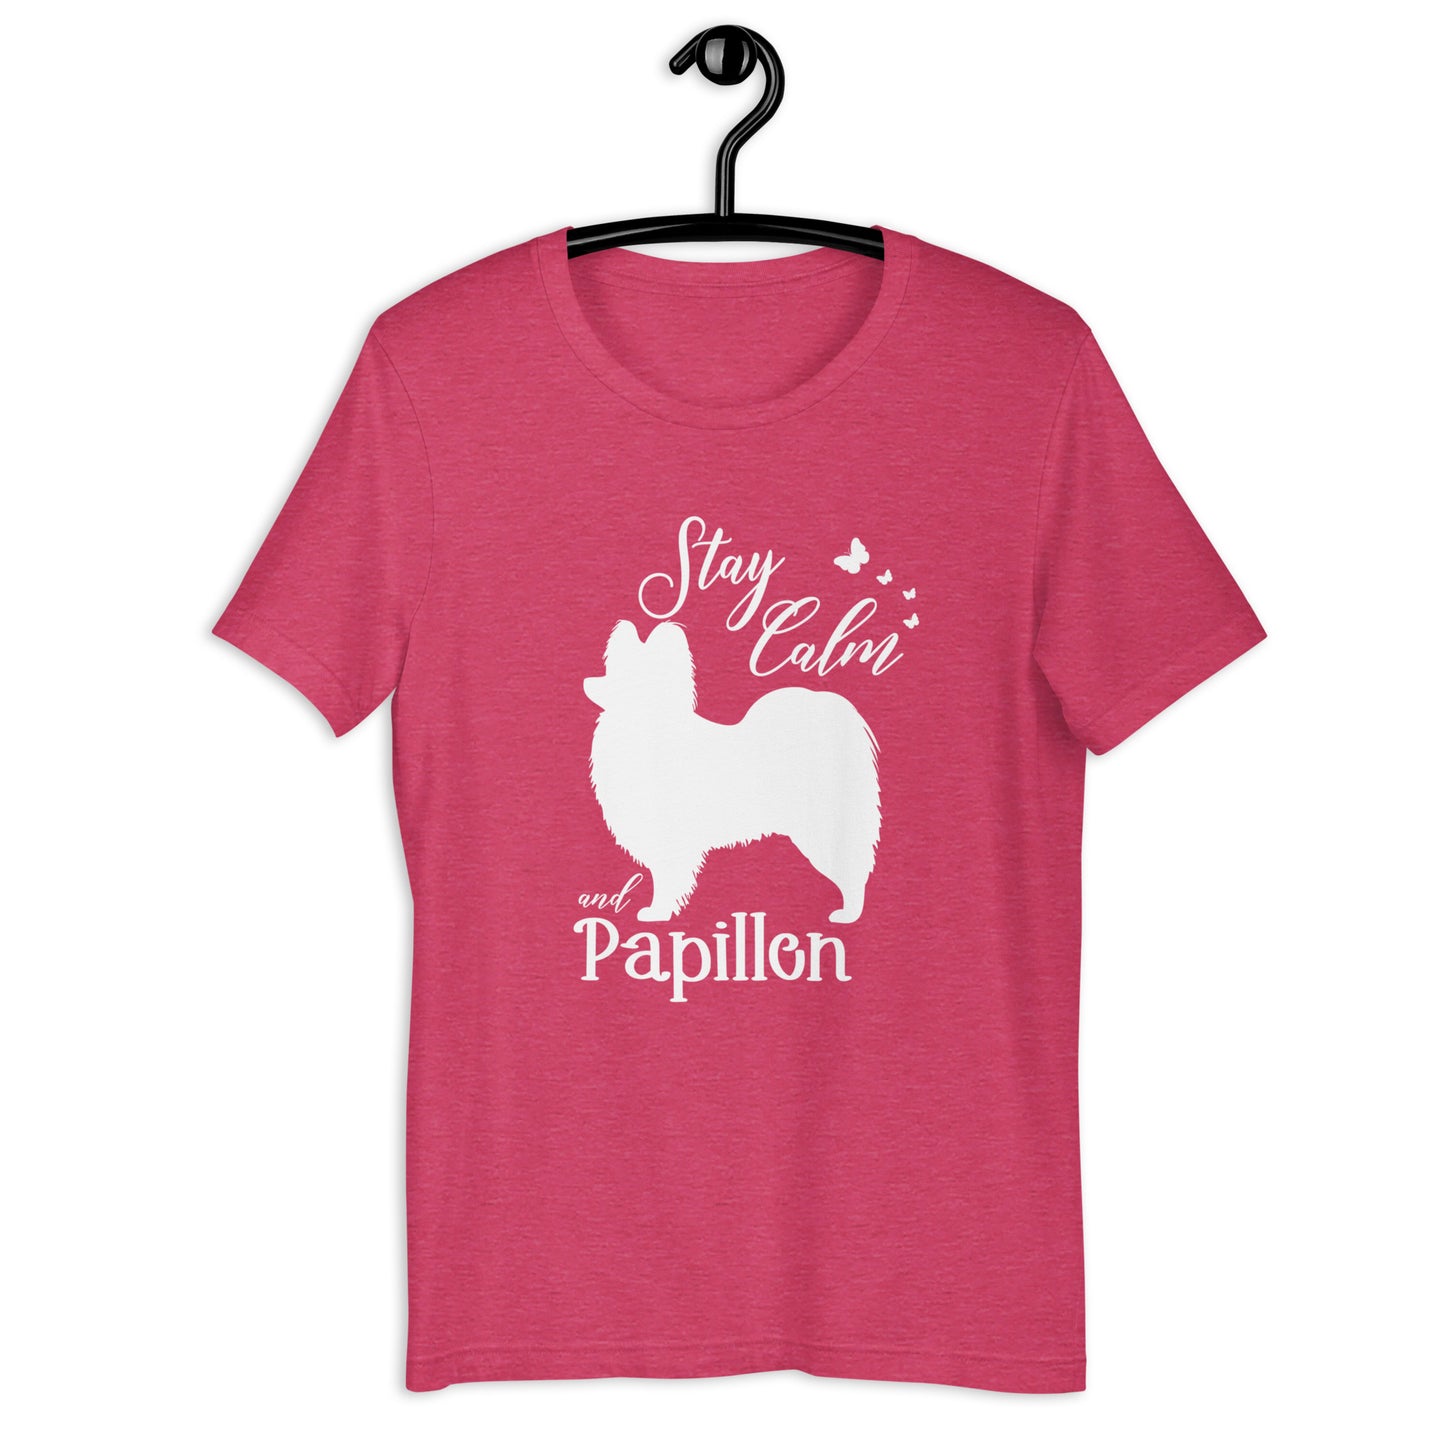 STAY CALM, & PAPILLON - Unisex t-shirt